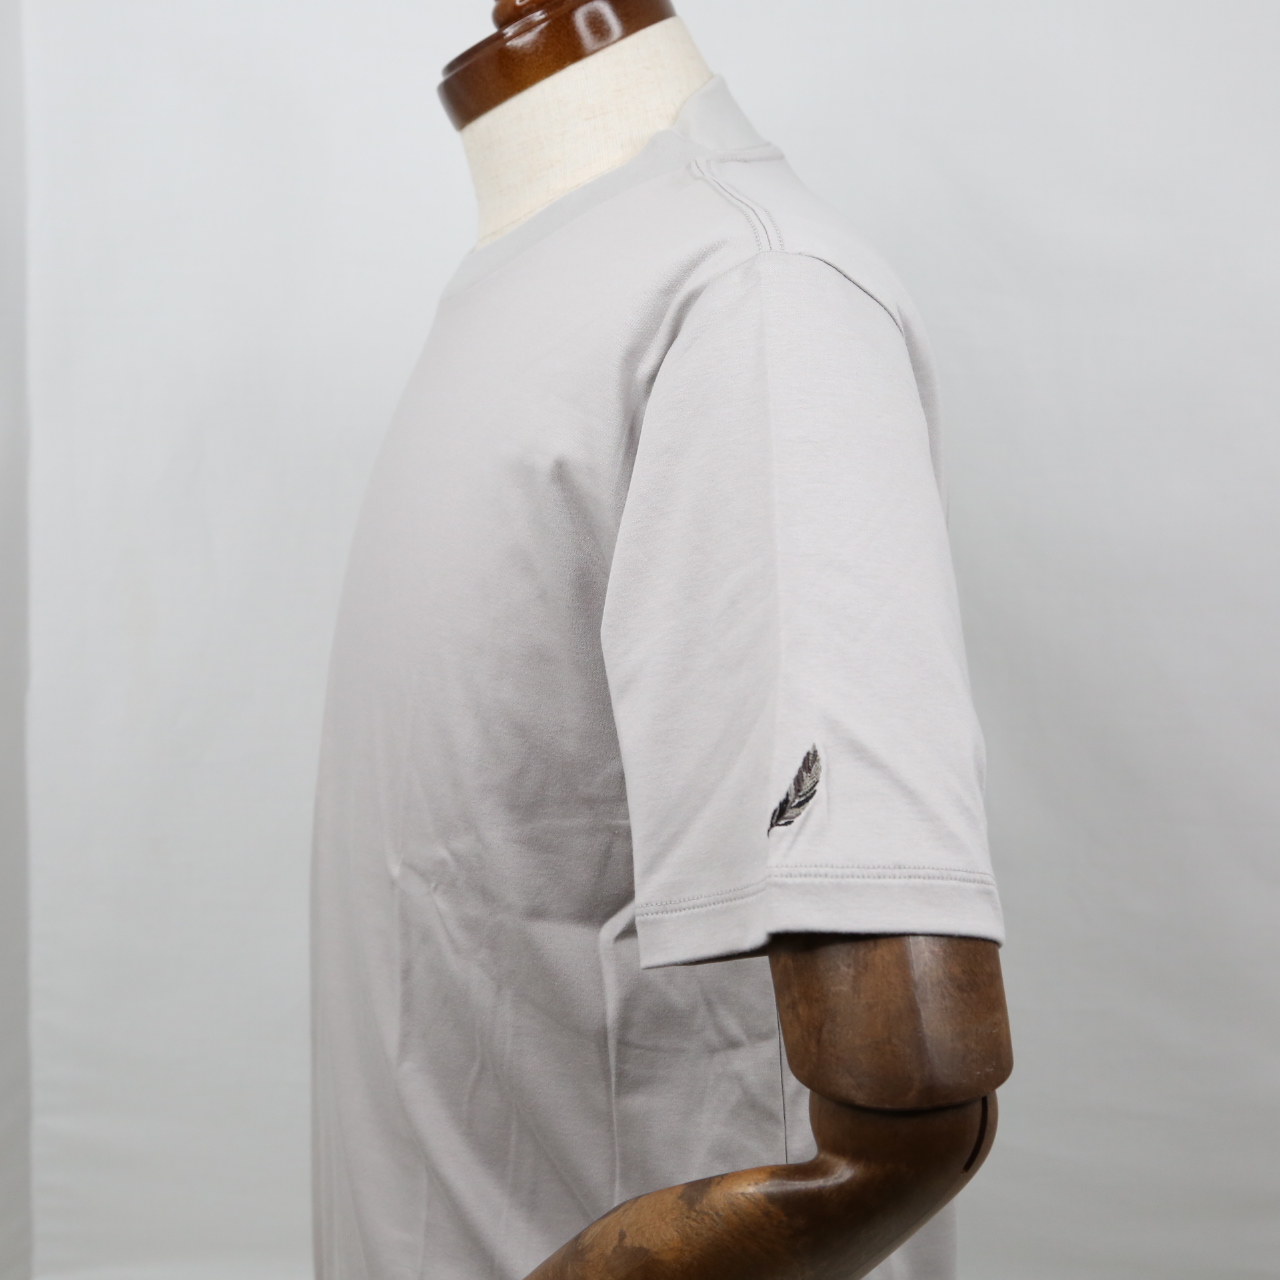 【NEW】プレミアムドレス Tシャツ  FATTURA  シャツ  半袖  袖口刺繍  グレー  日本製